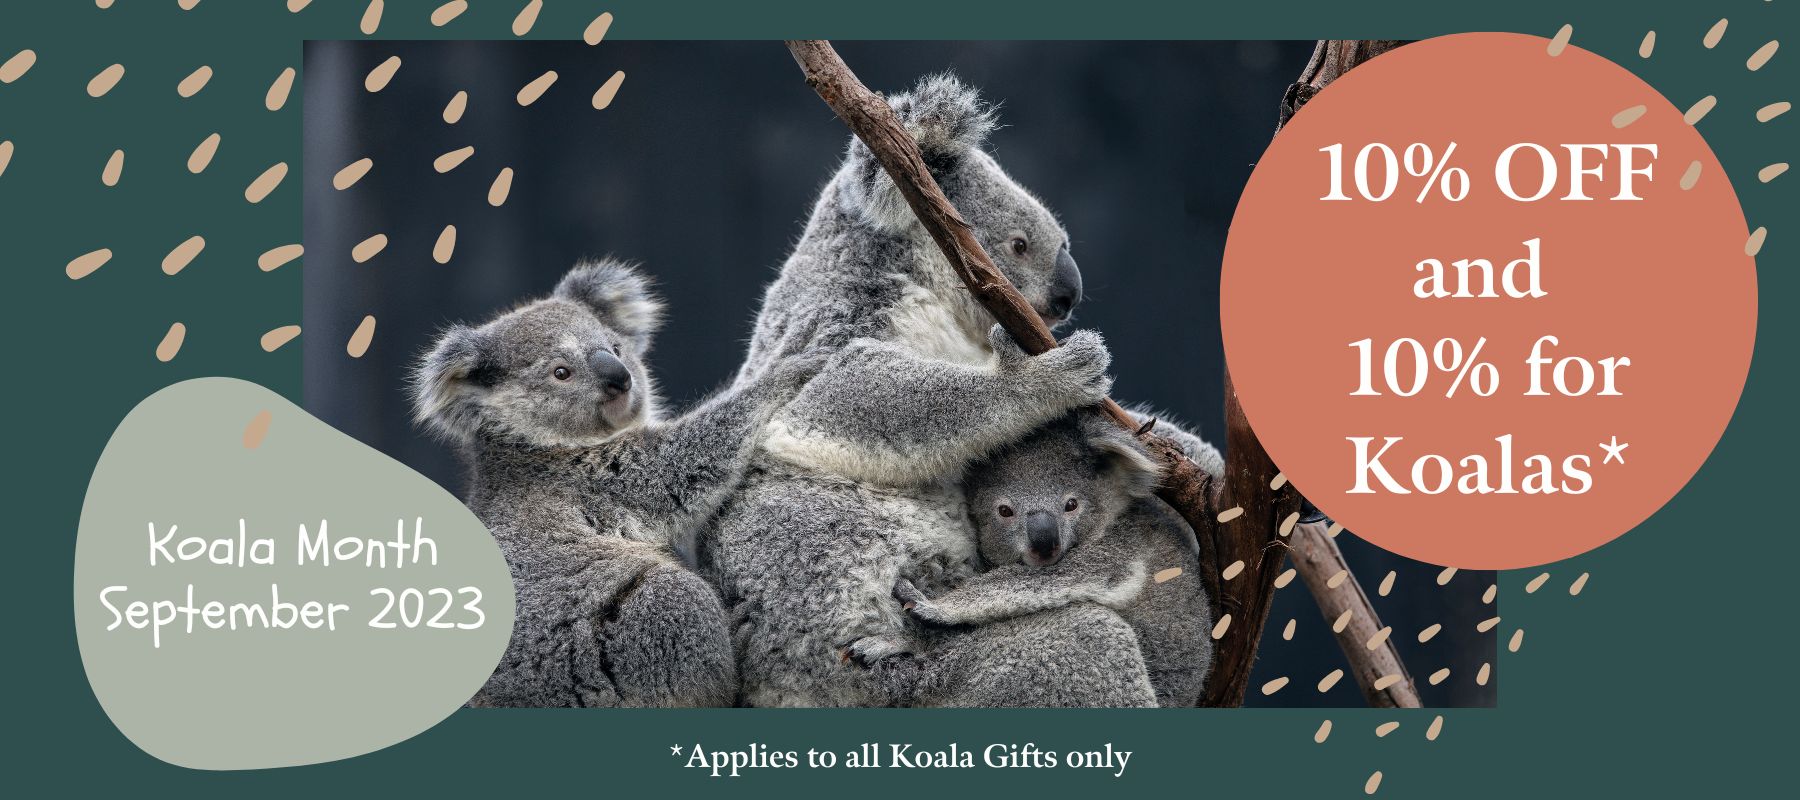 koala gifts australia promotion sale september 2023 koala month